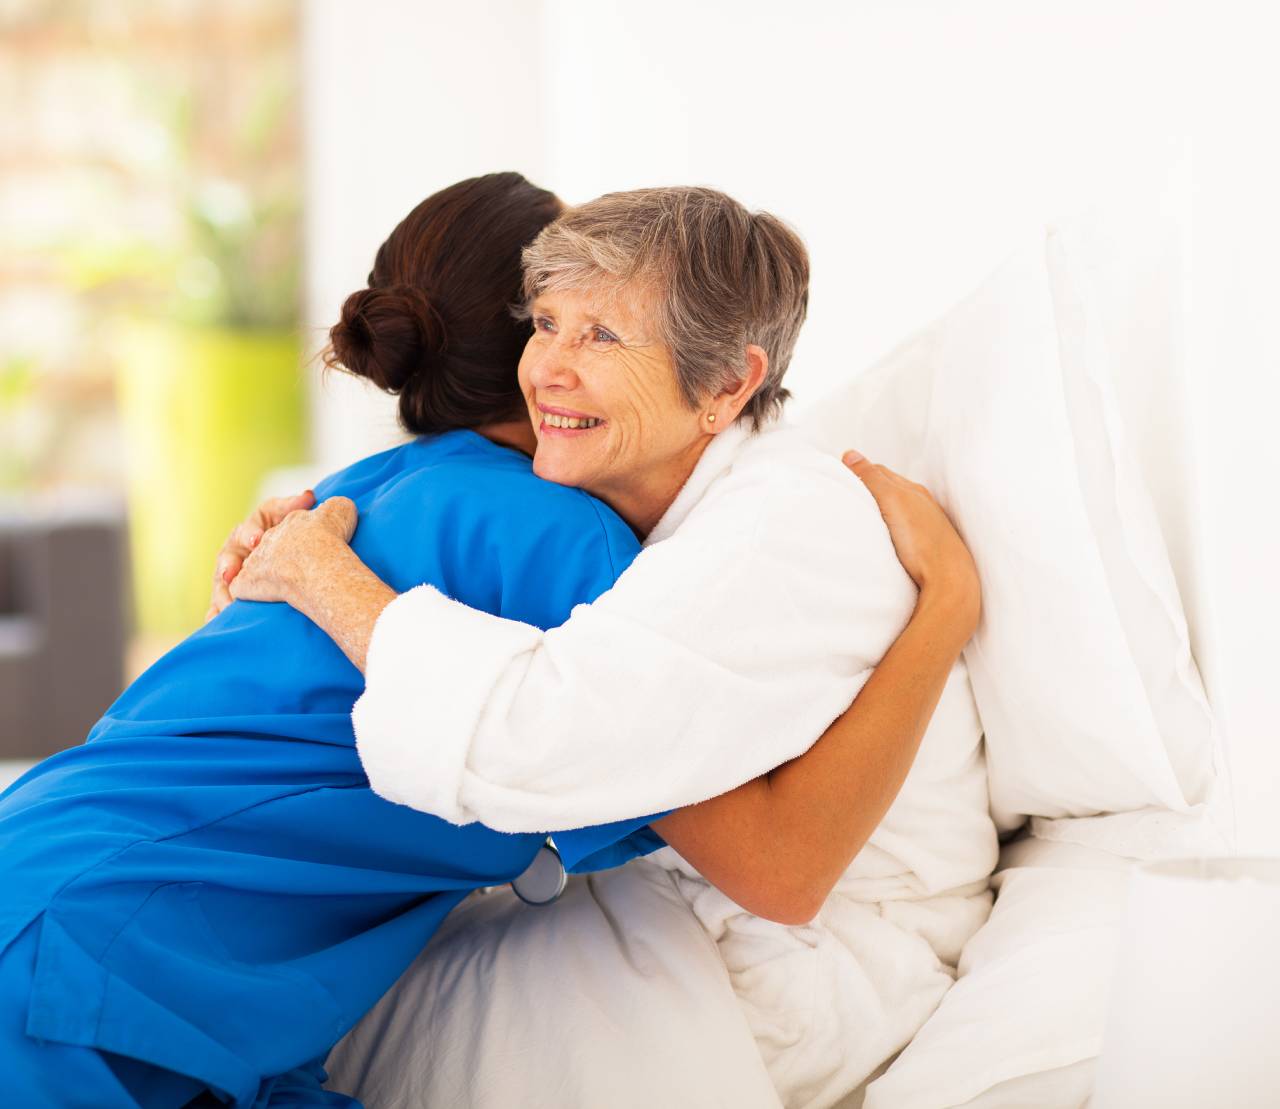 Cuidadora abraza mujer mayor